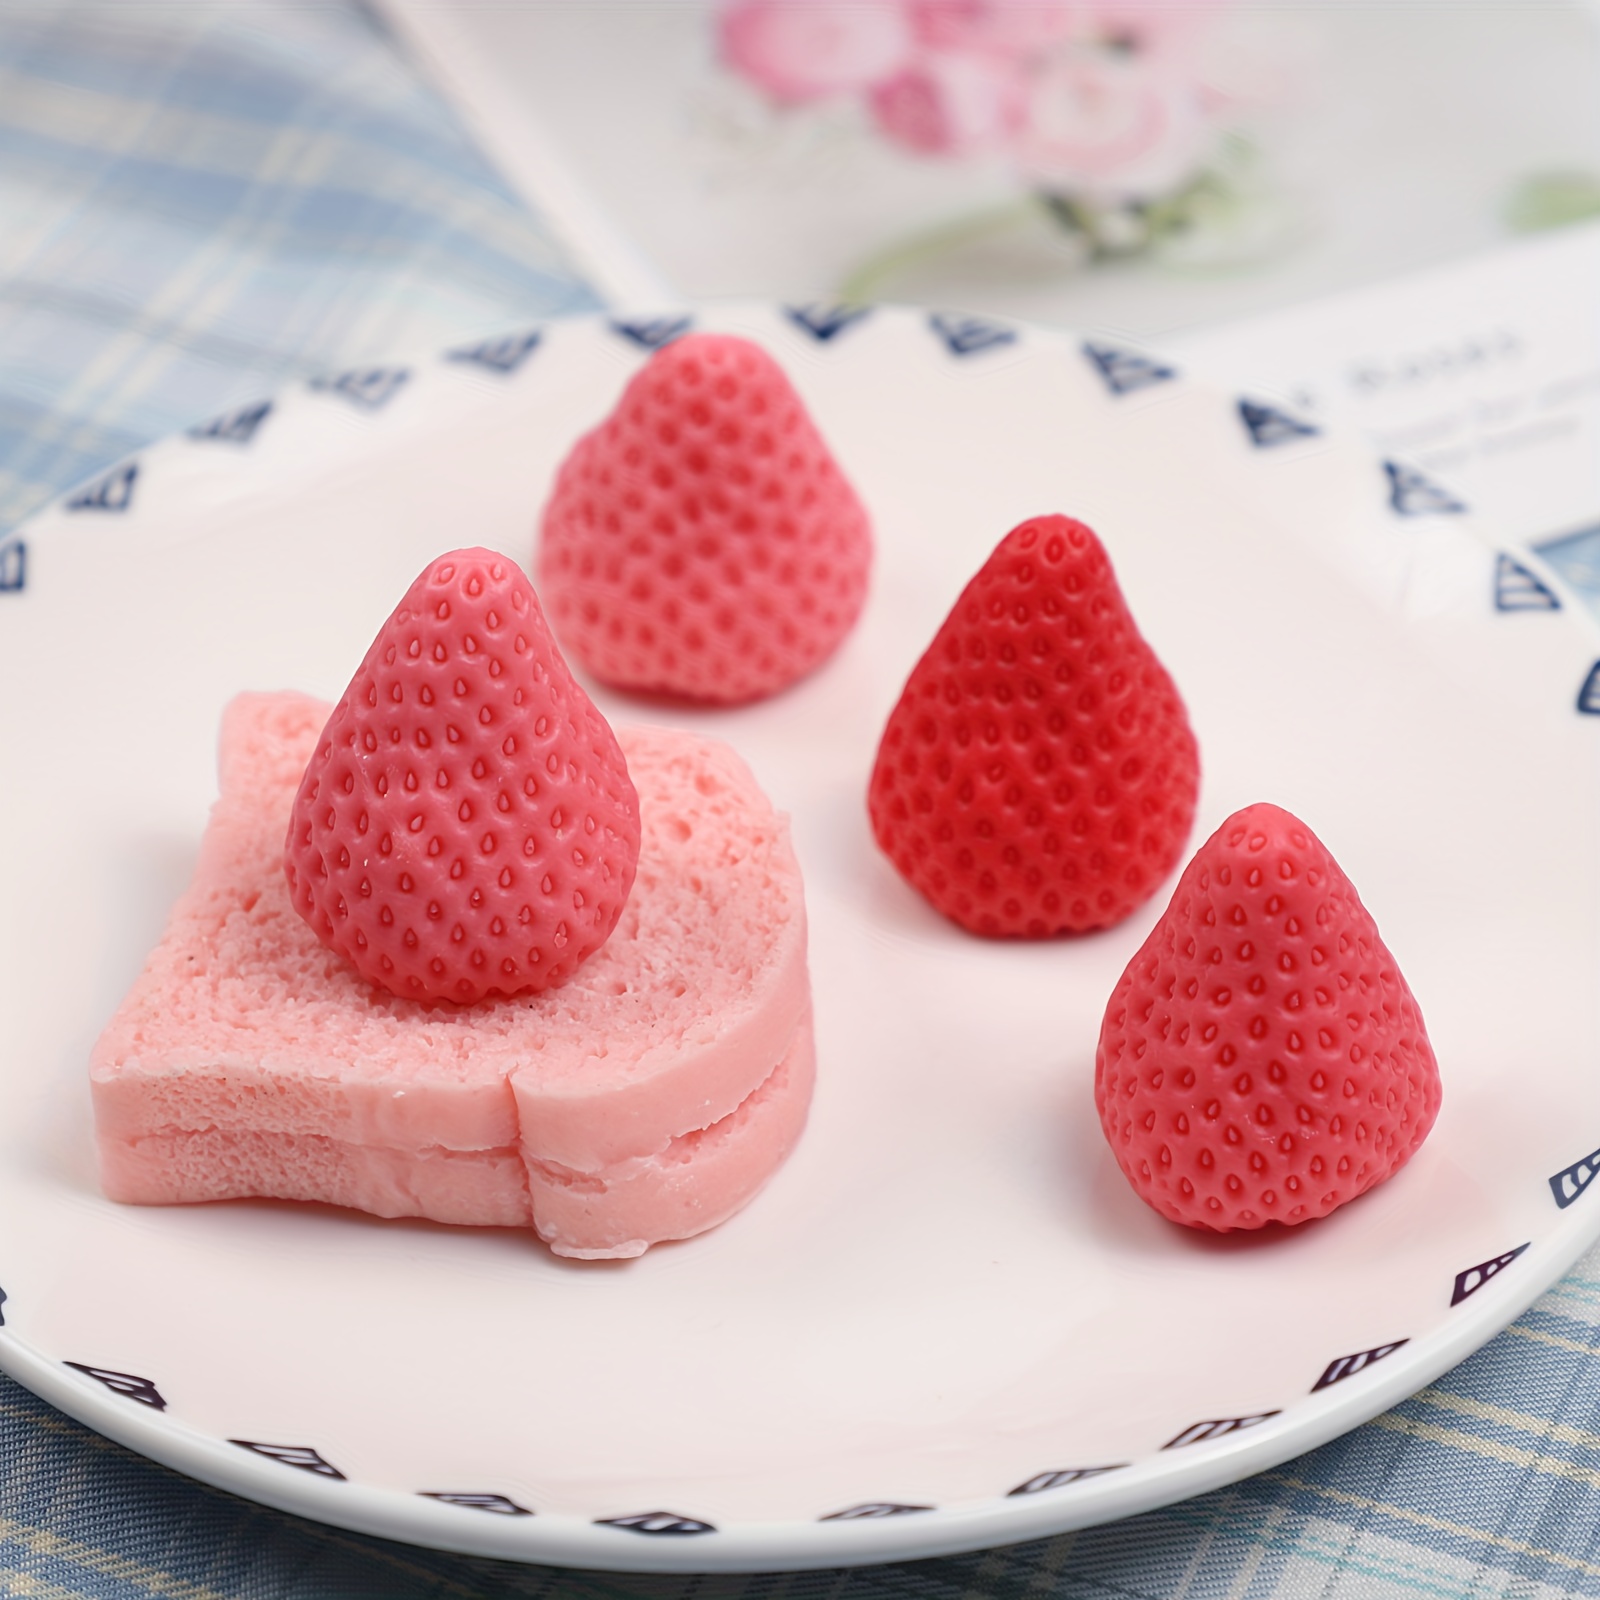 3D Strawberry Silicone Gummy Mold 15 Cavity Half Strawberry Maker